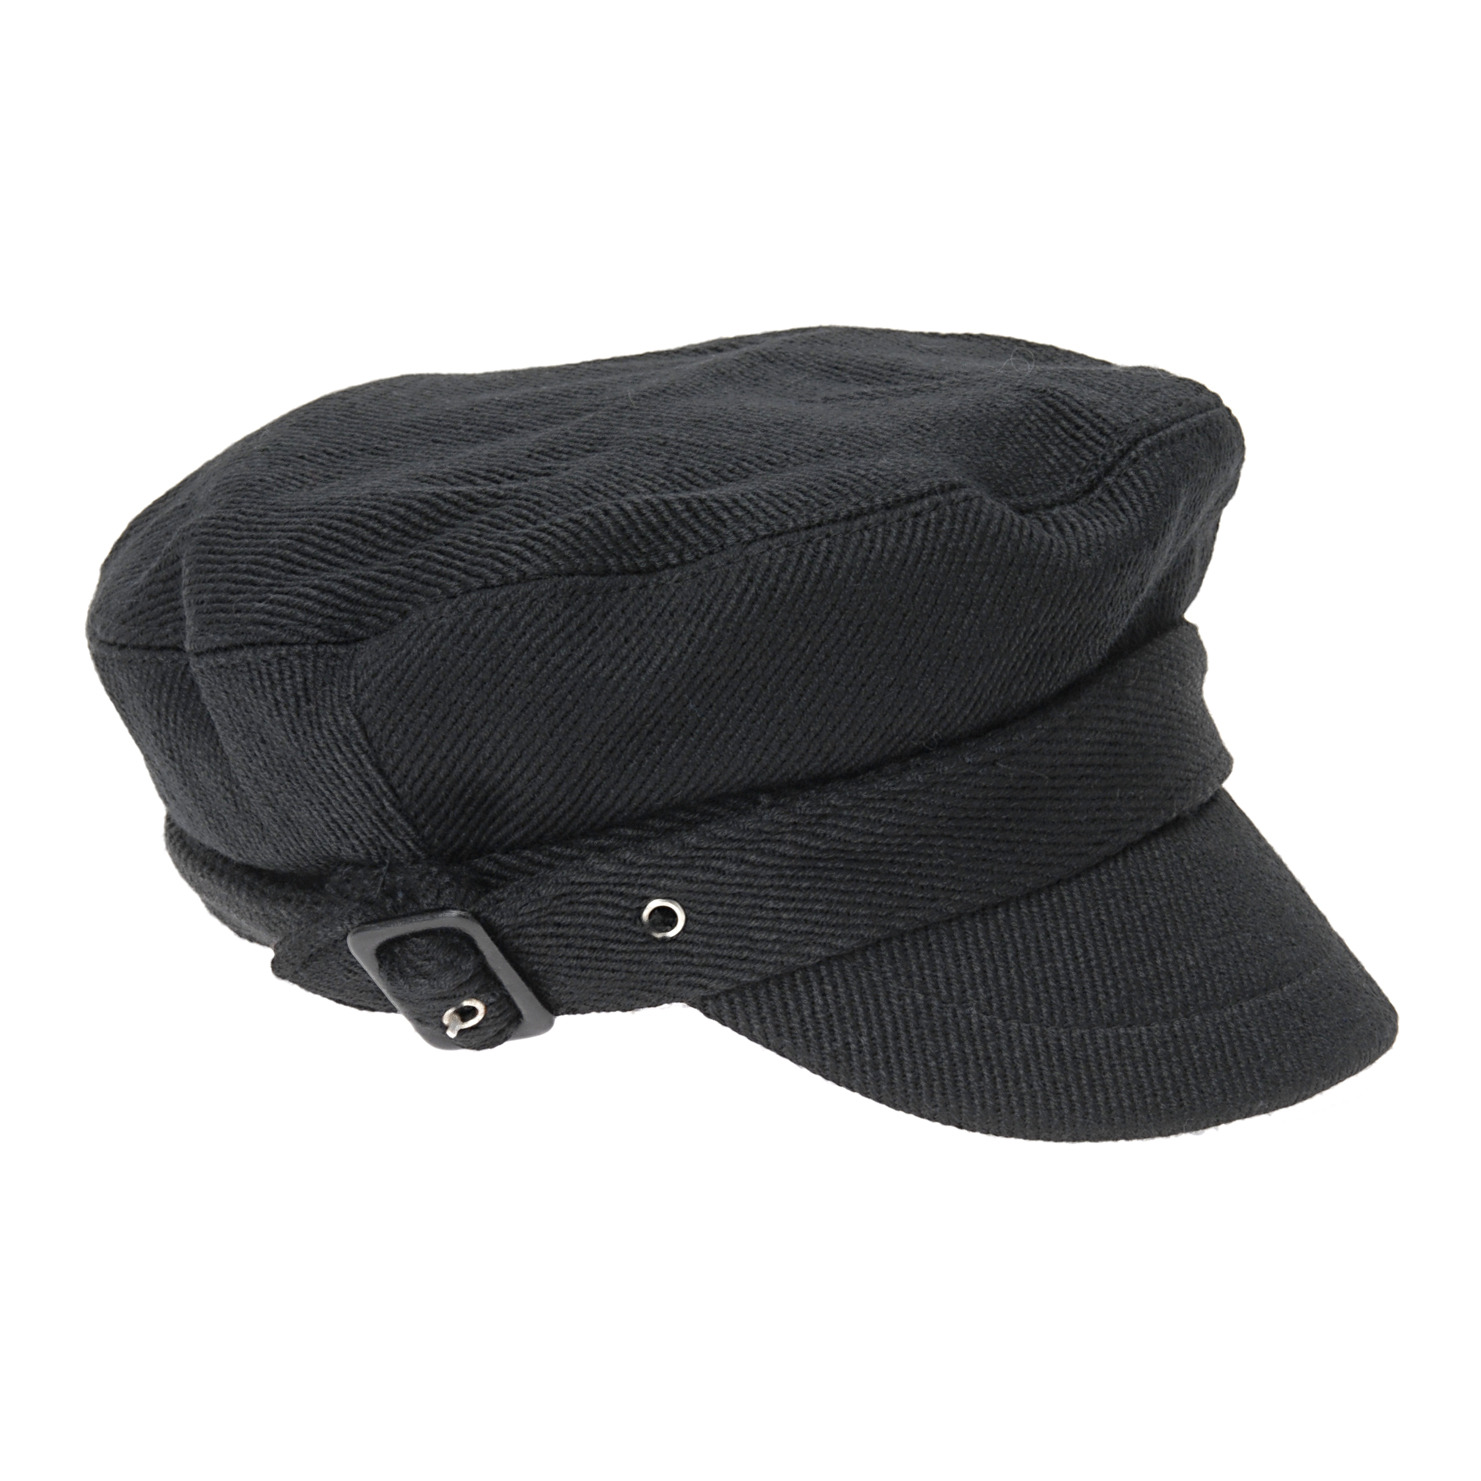 Newsboy cap, Stetson hat, Newsboy